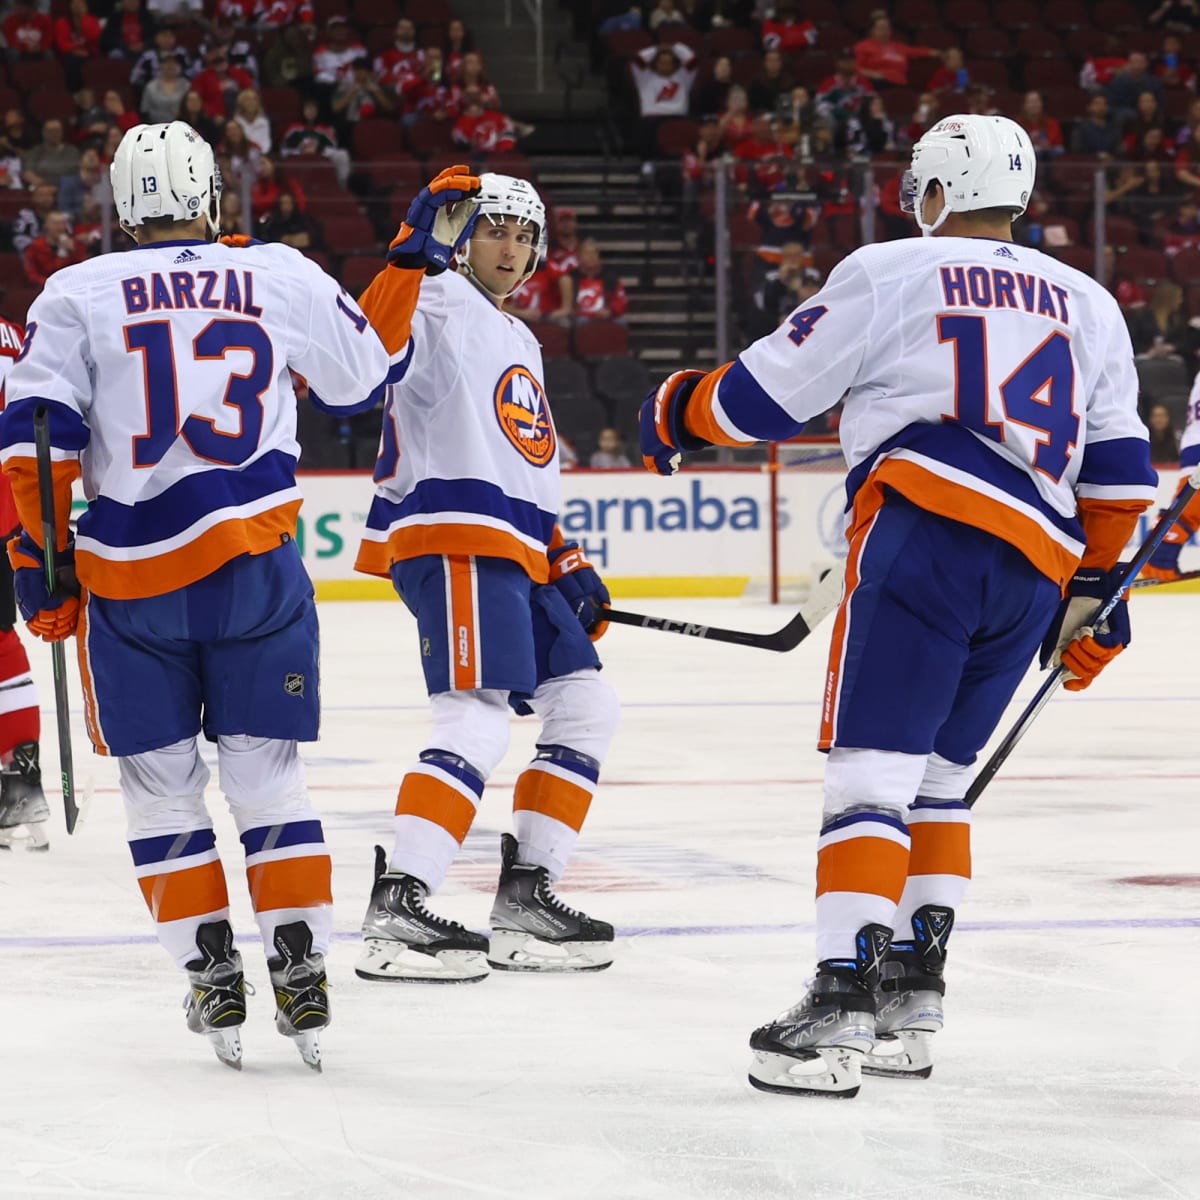 NY Islanders: Lane Lambert details how Noah Dobson can find